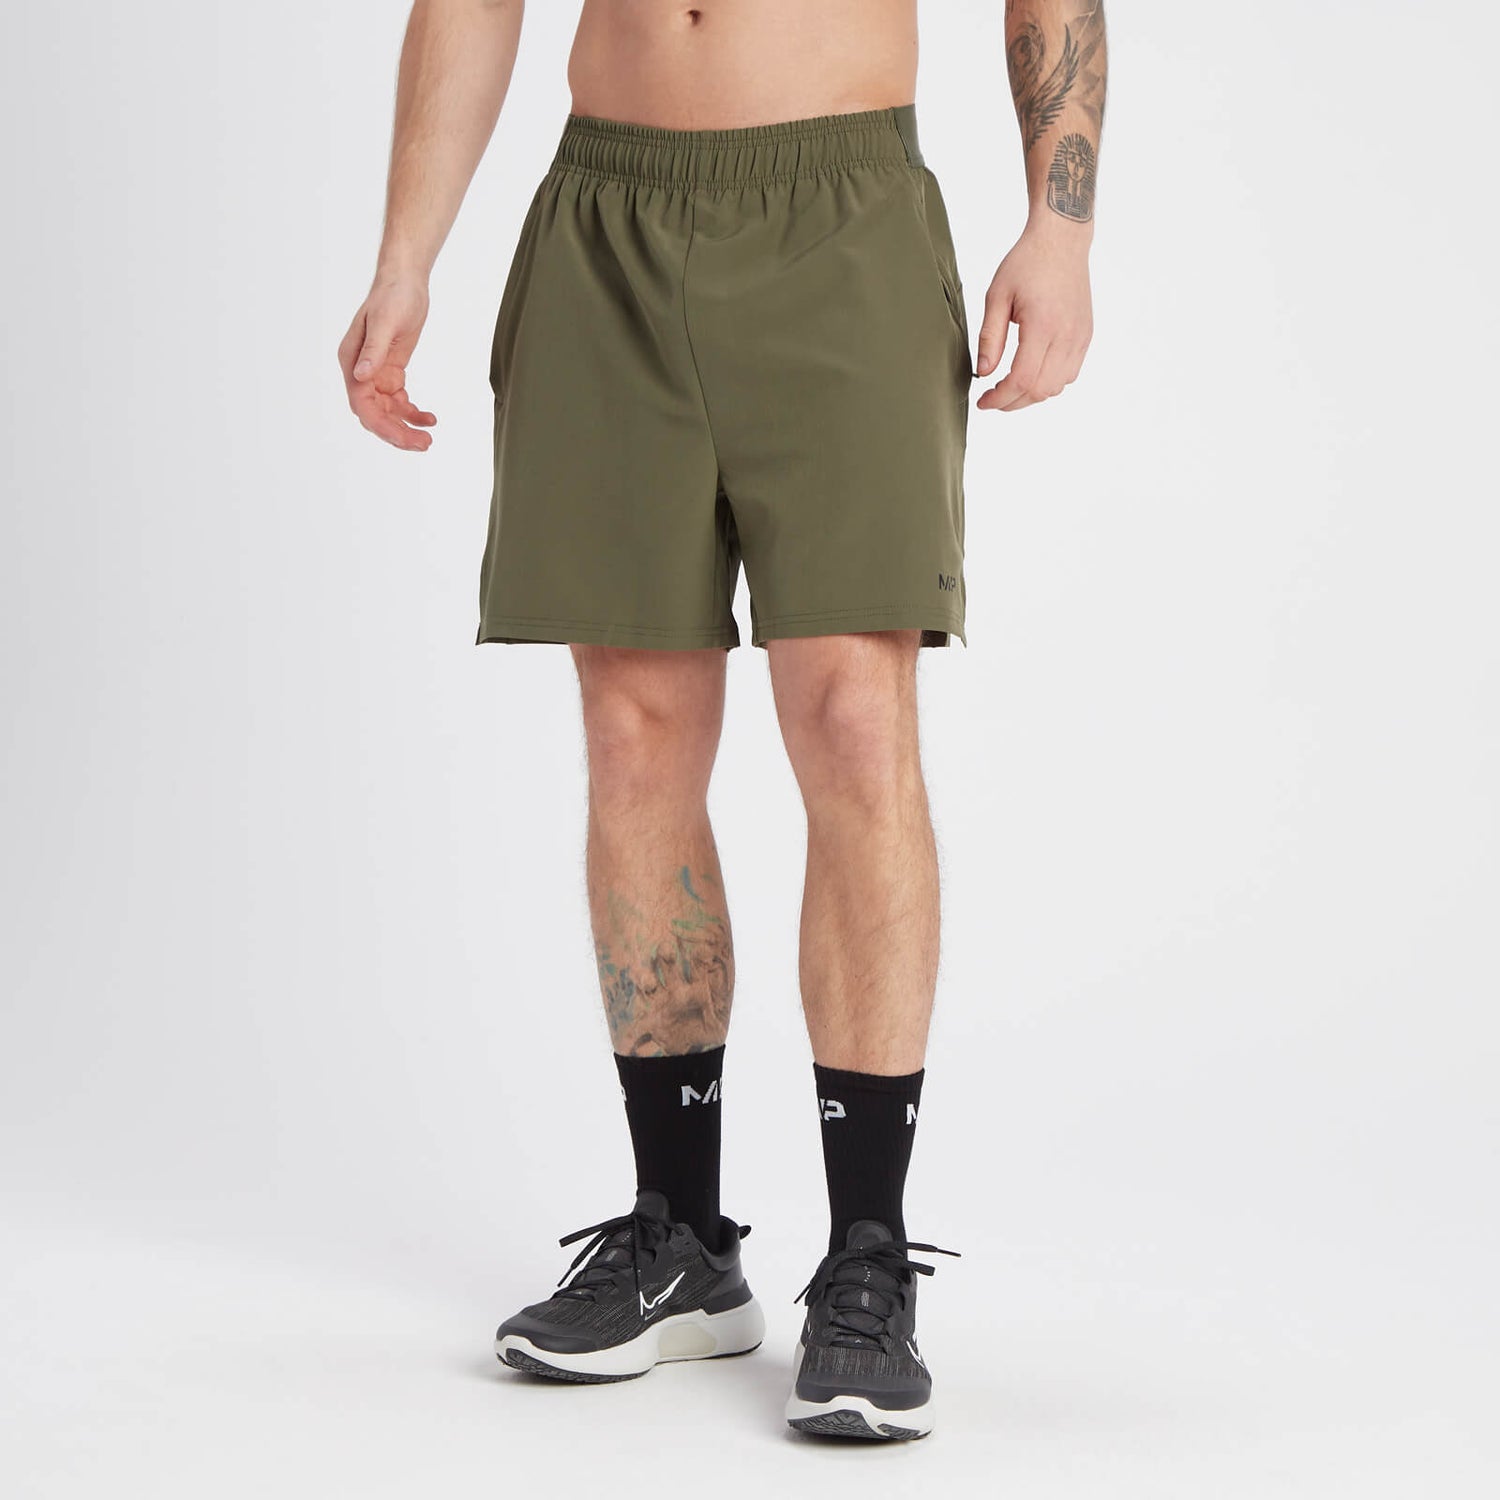 Adapt适应系列男士360梭织短裤 - 橄榄绿 - XS